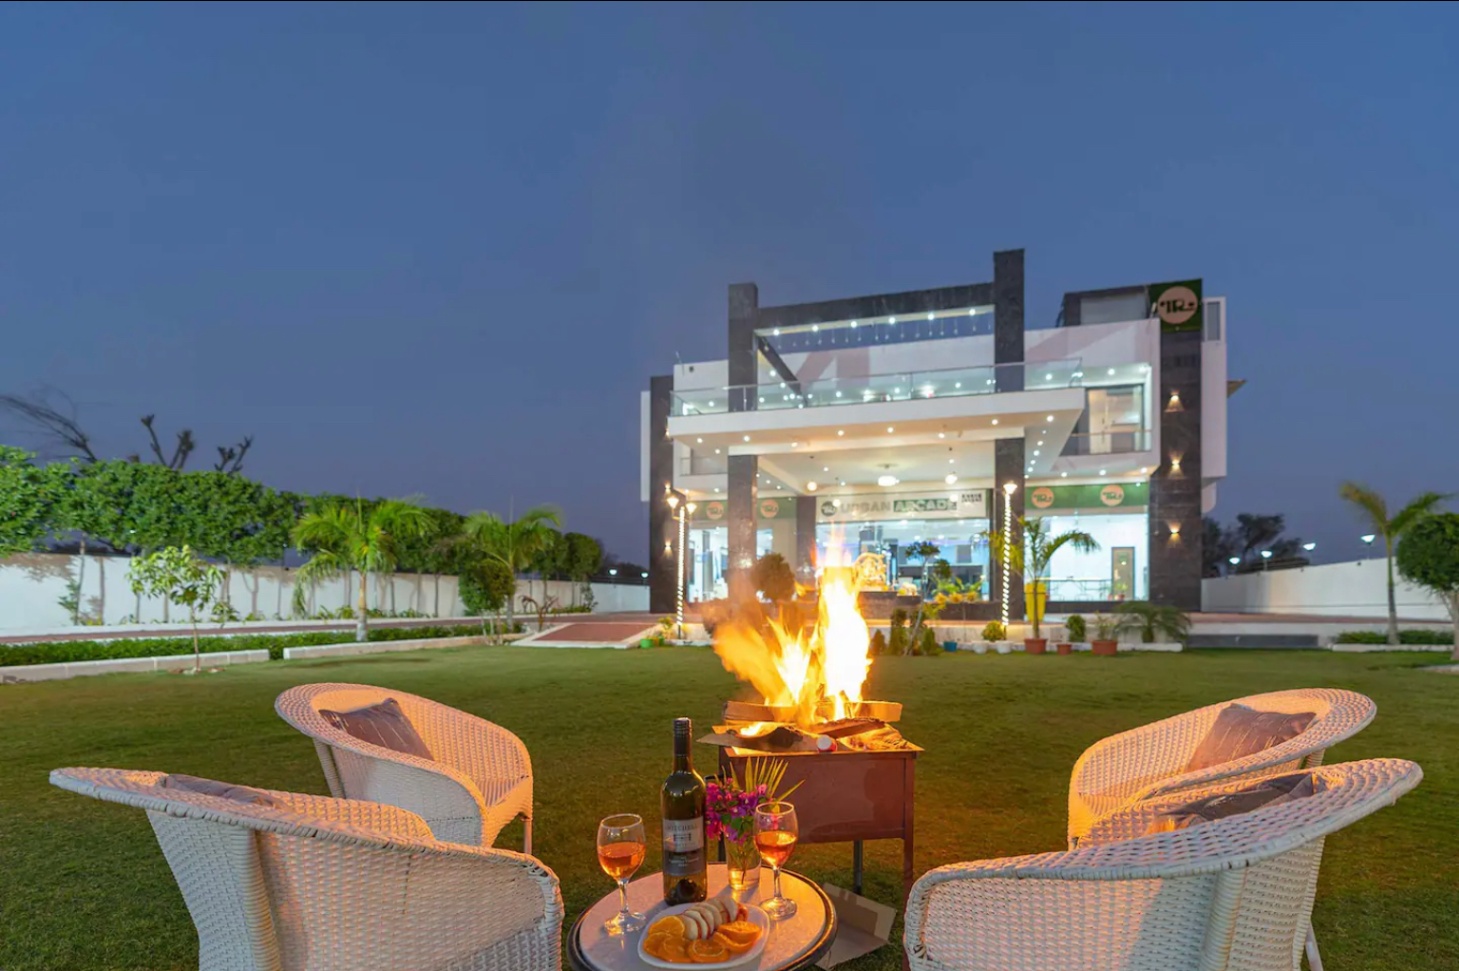 5+ Bed/ 5+ Bath Rent House/ Bungalow/ Villa; 20,000 sq. ft. carpet area, Furnished for rent @Jaipur